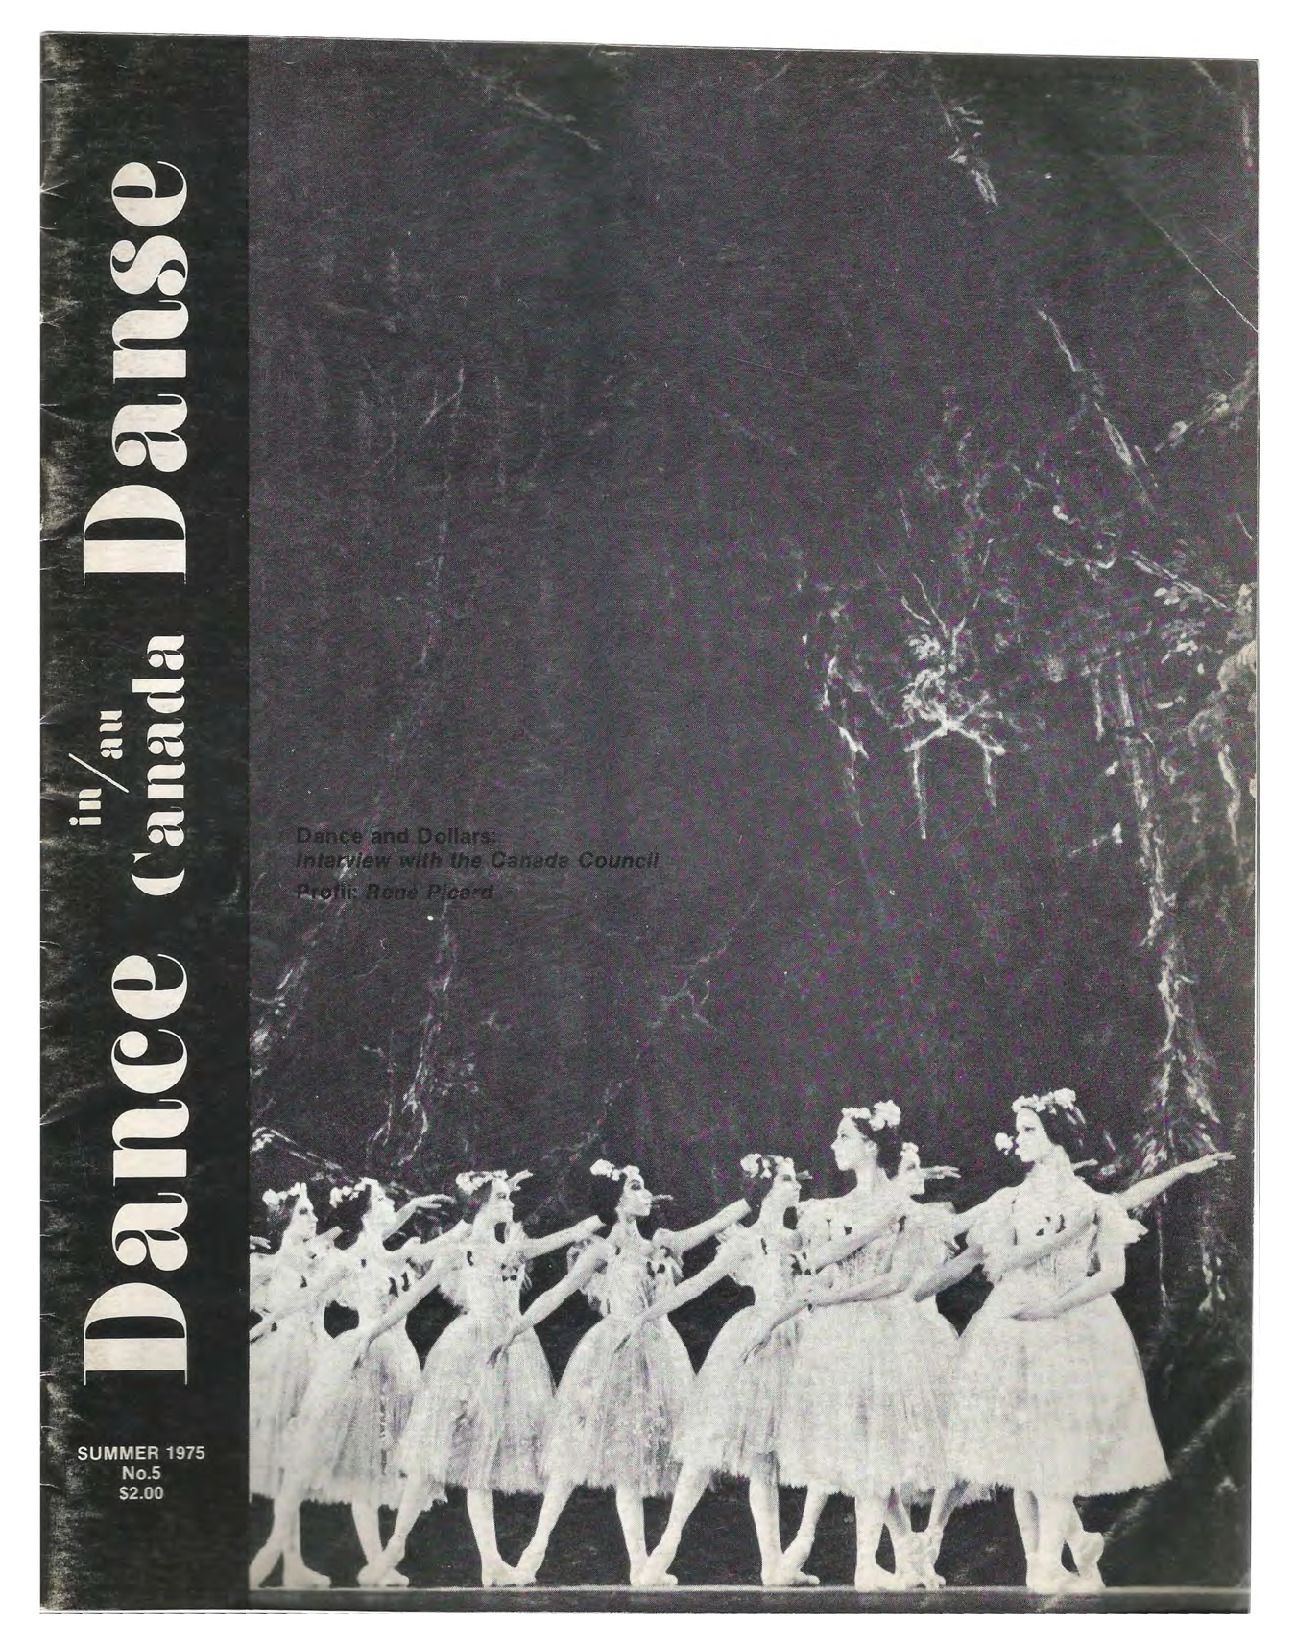 Dance in Canada Magazine No 5 Summer 1975 compressed.pdf